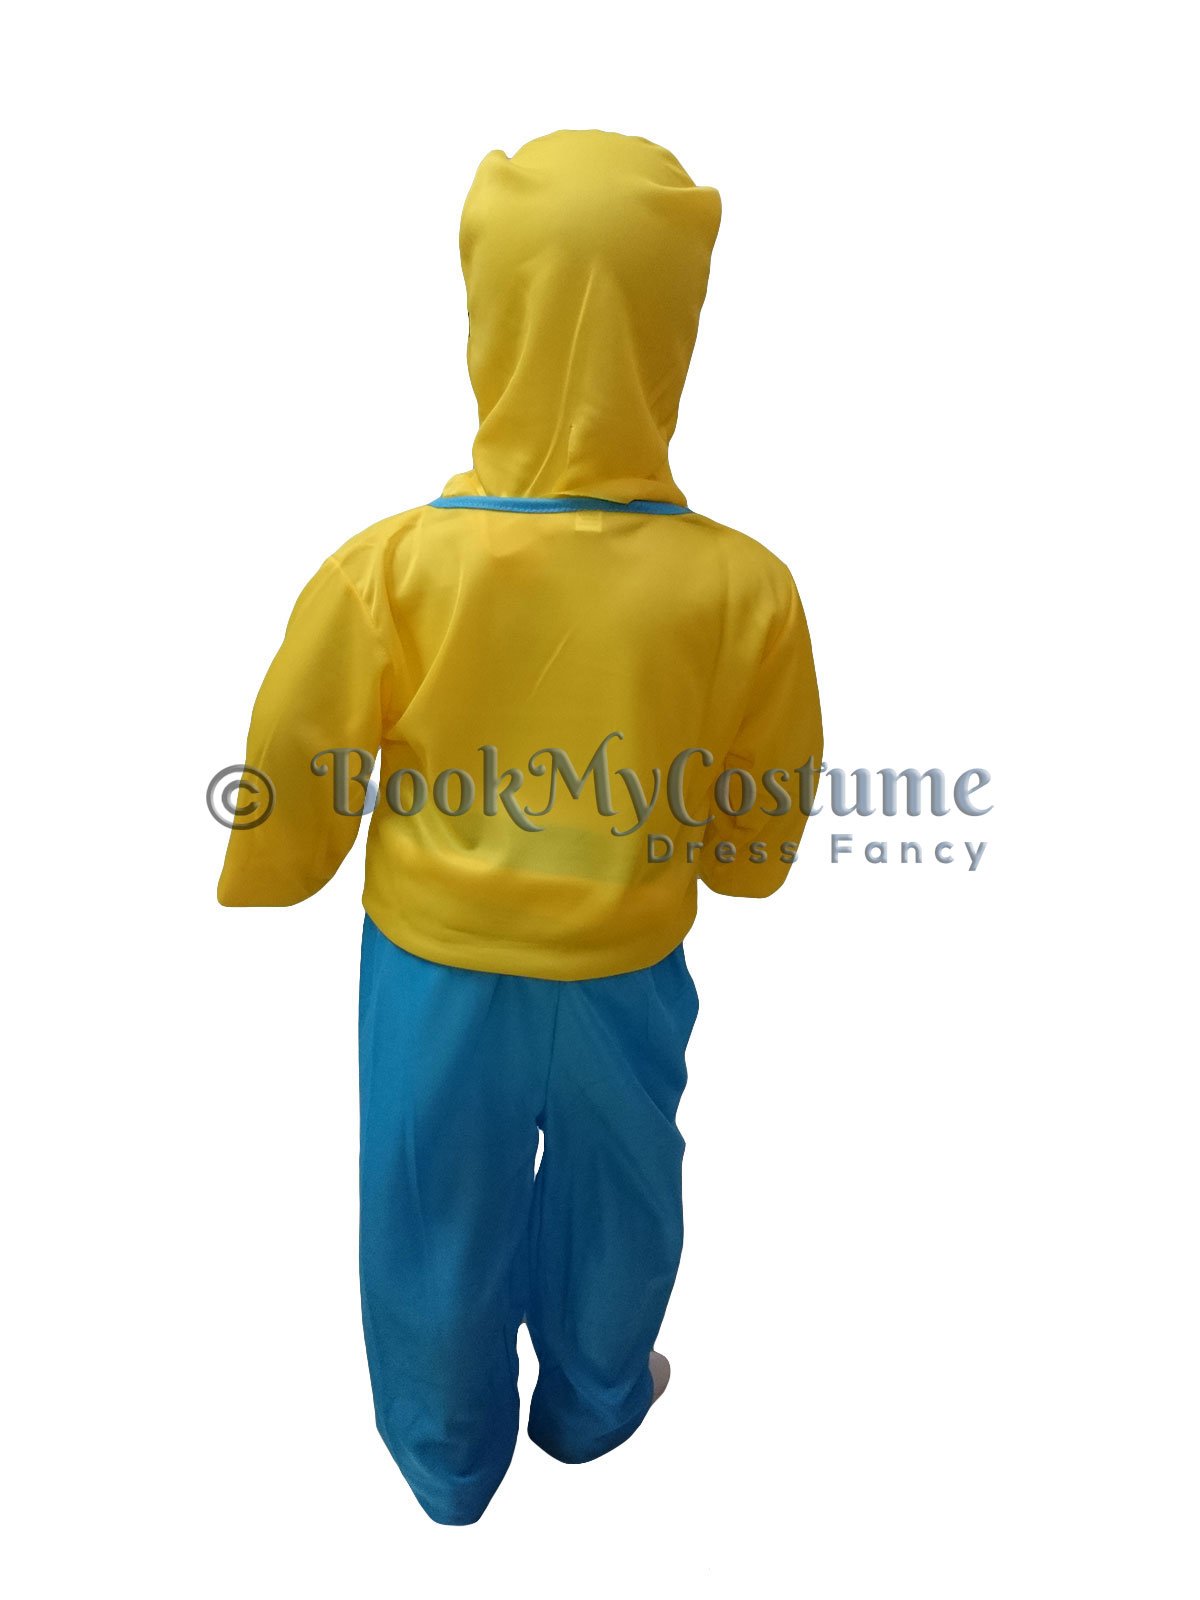 Minion Cartoon Character (Despicable ME) Kids Fancy Dress Costume | Standard